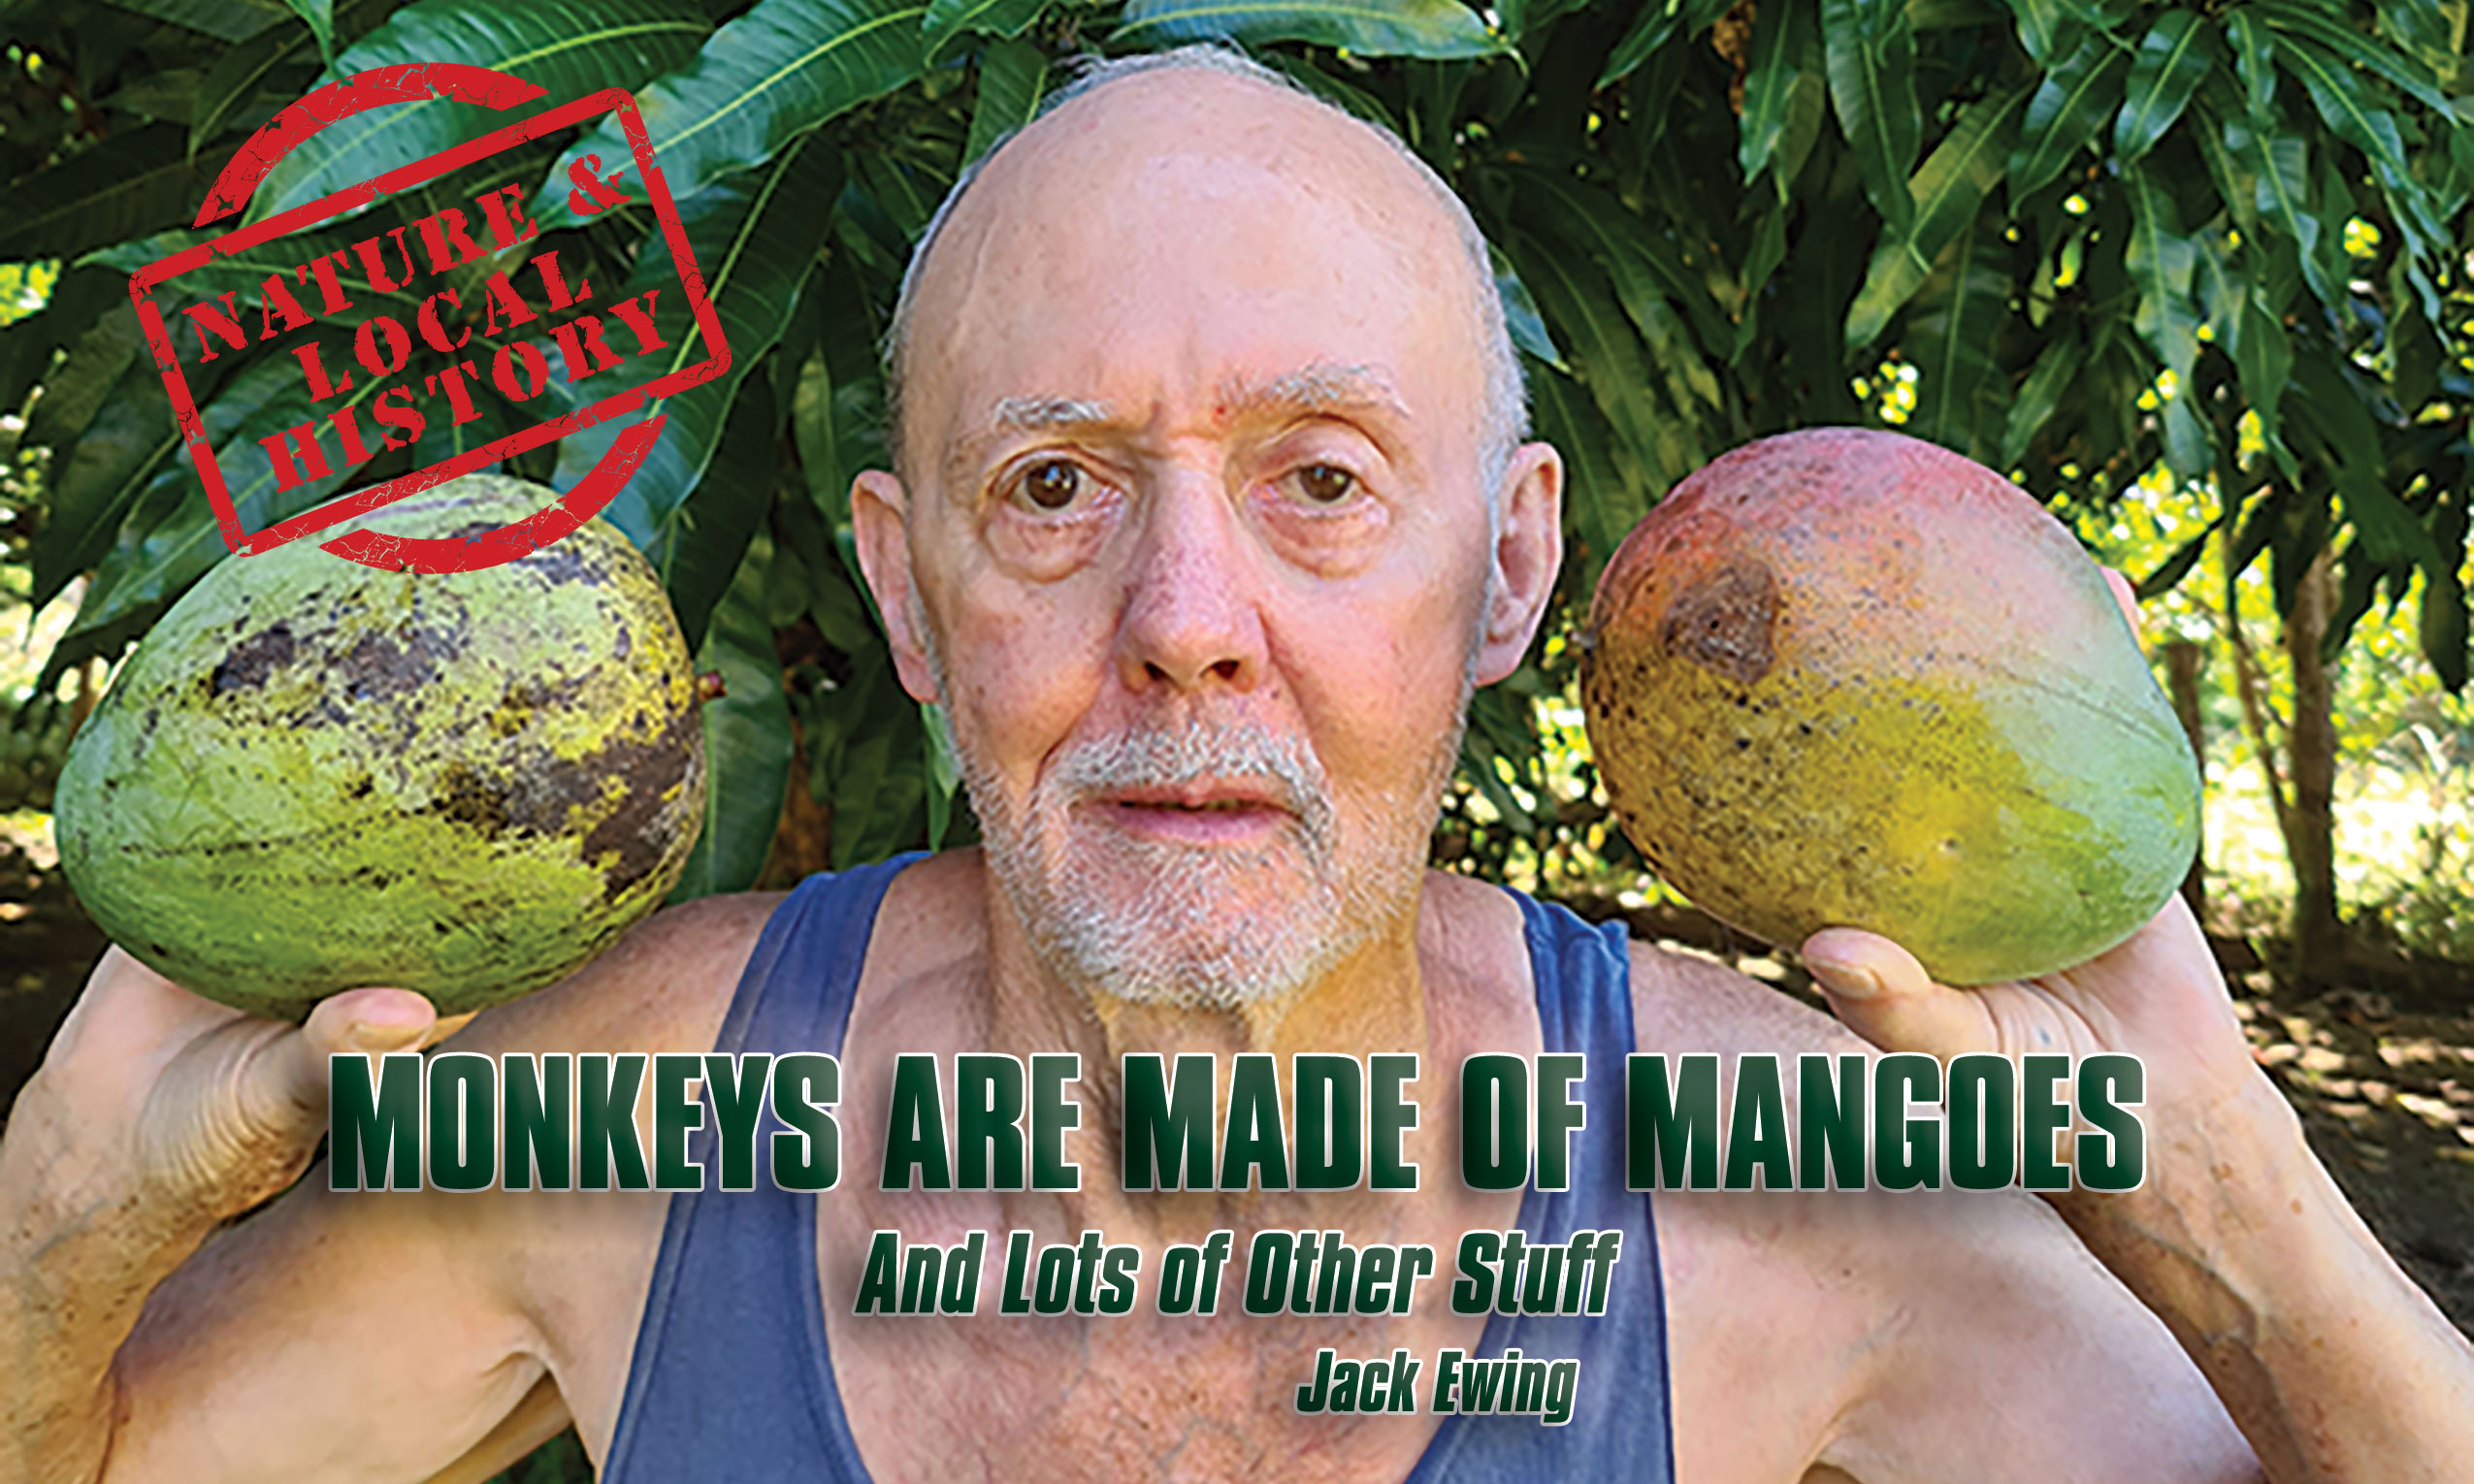 Jack holding two big mangoes, header